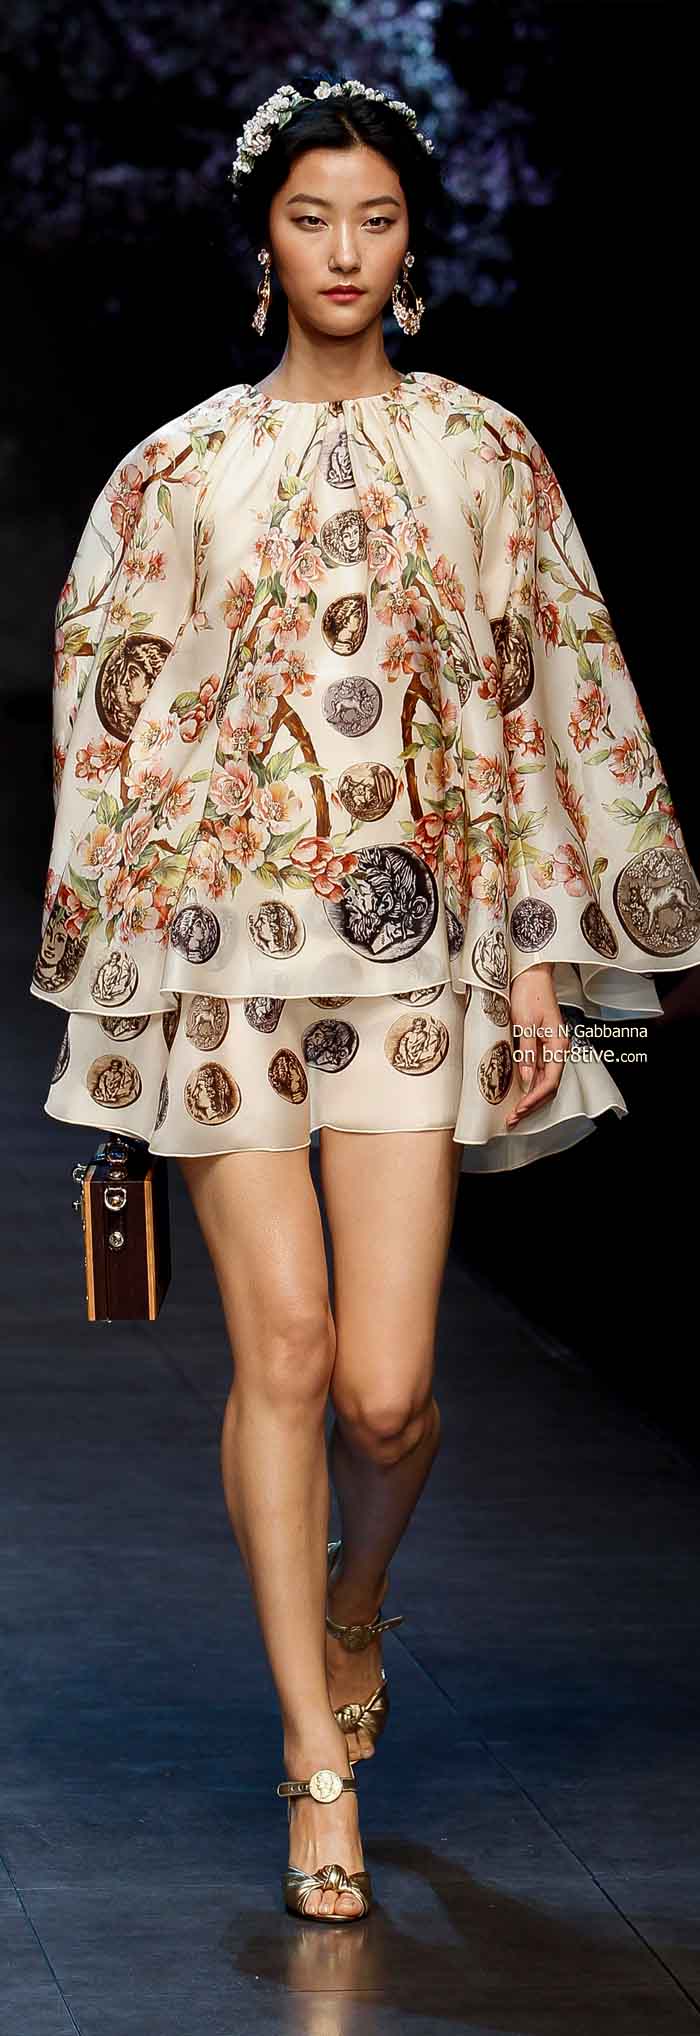 Dolce & Gabbana Spring 2014